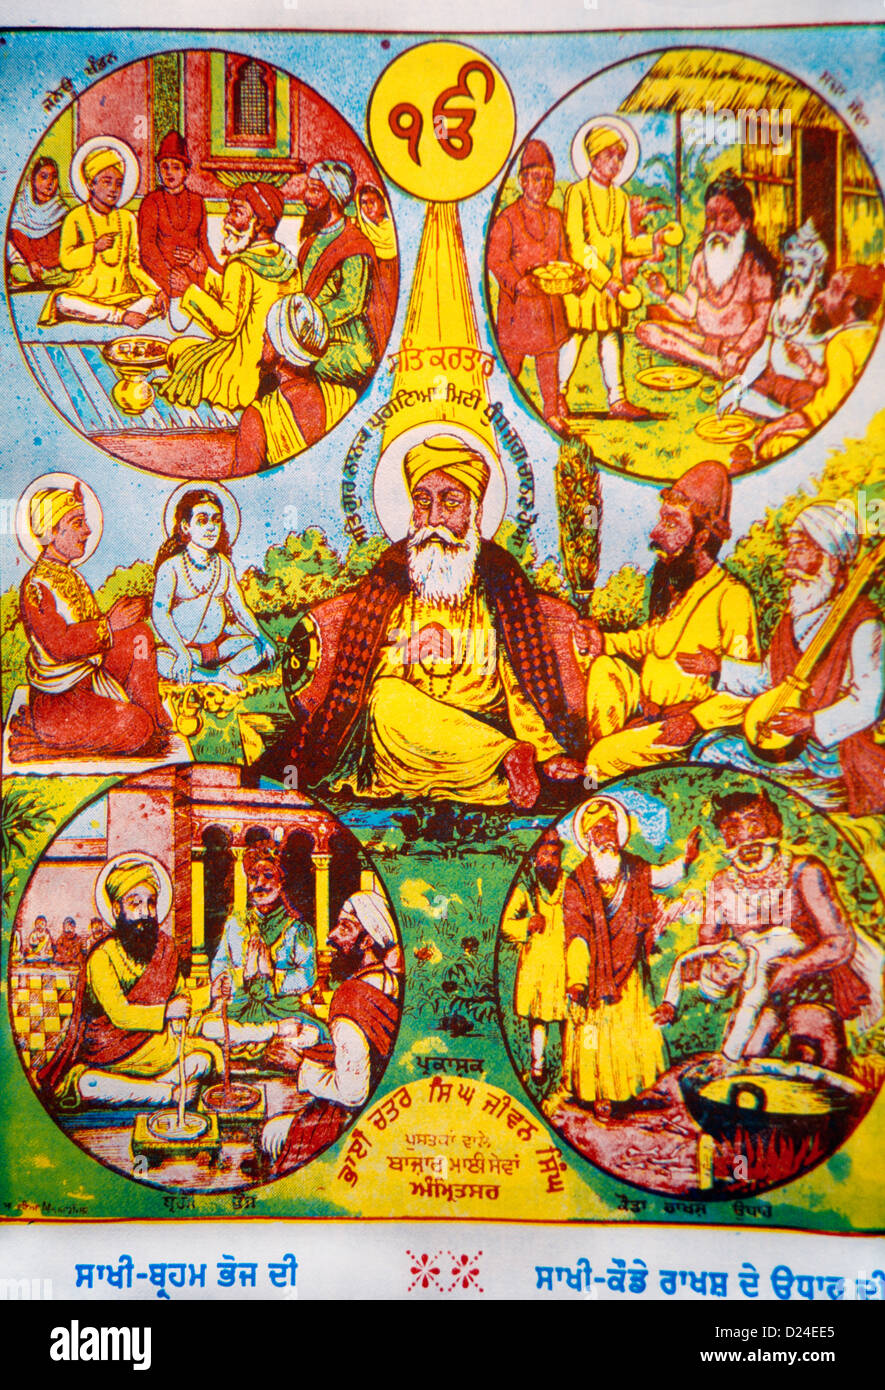 Guru Nanak Stories Cartoon for Children Stock Photo - Alamy